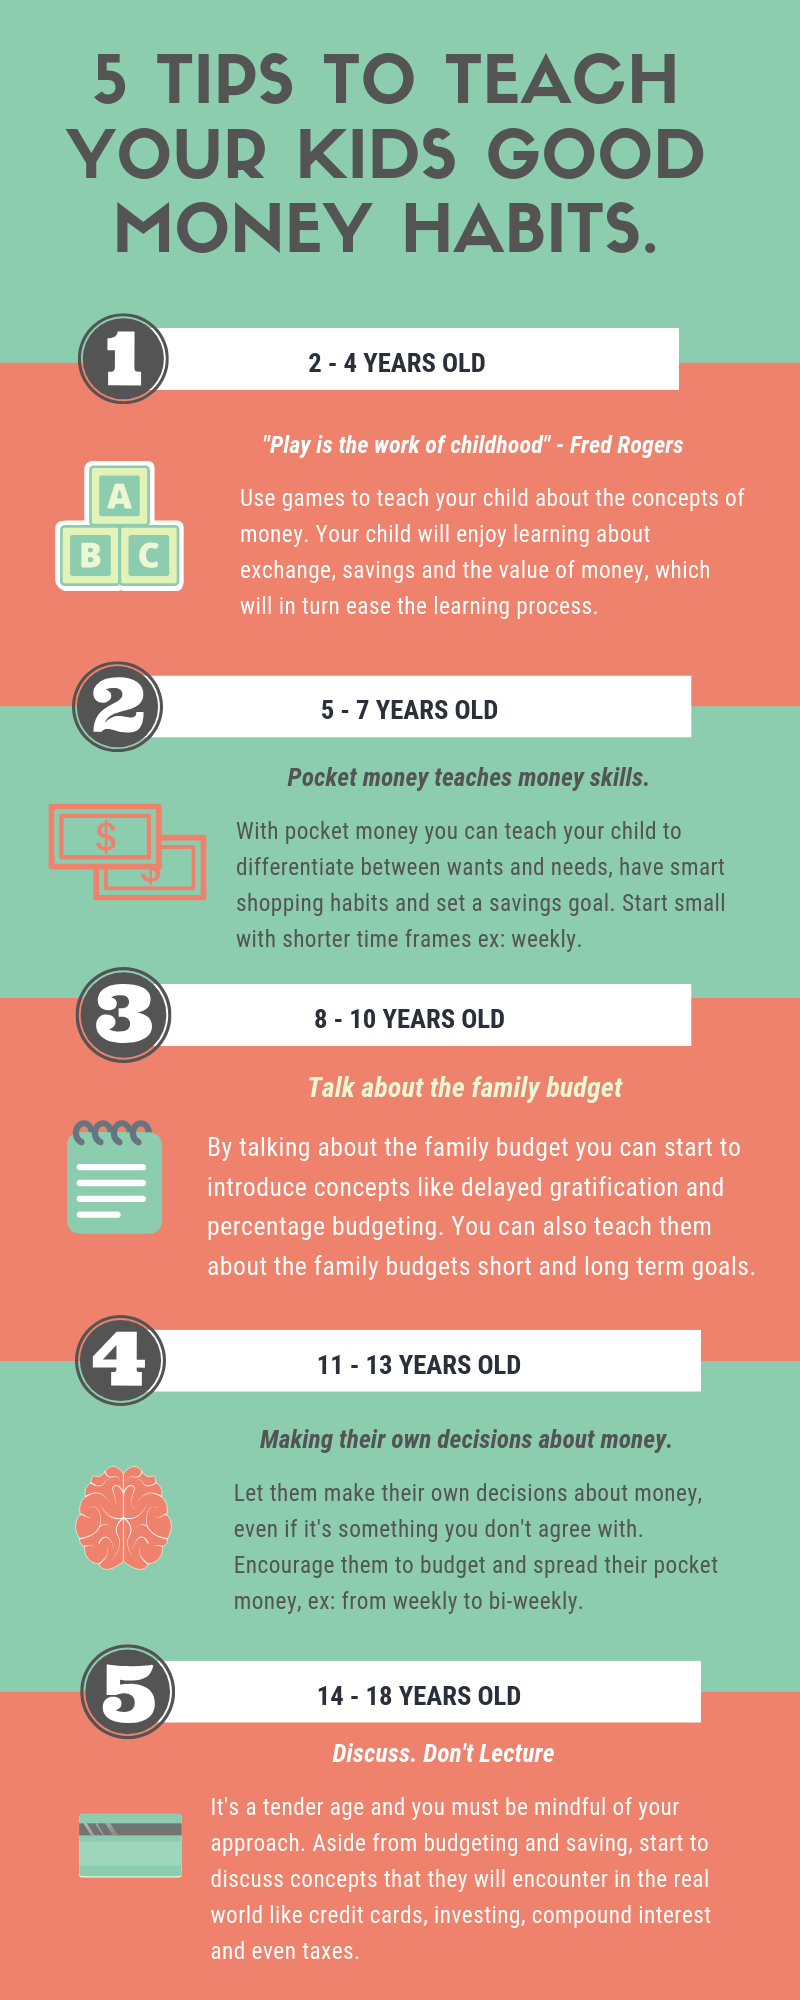 Teaching Kids Good Money Habits - Plans & Tips